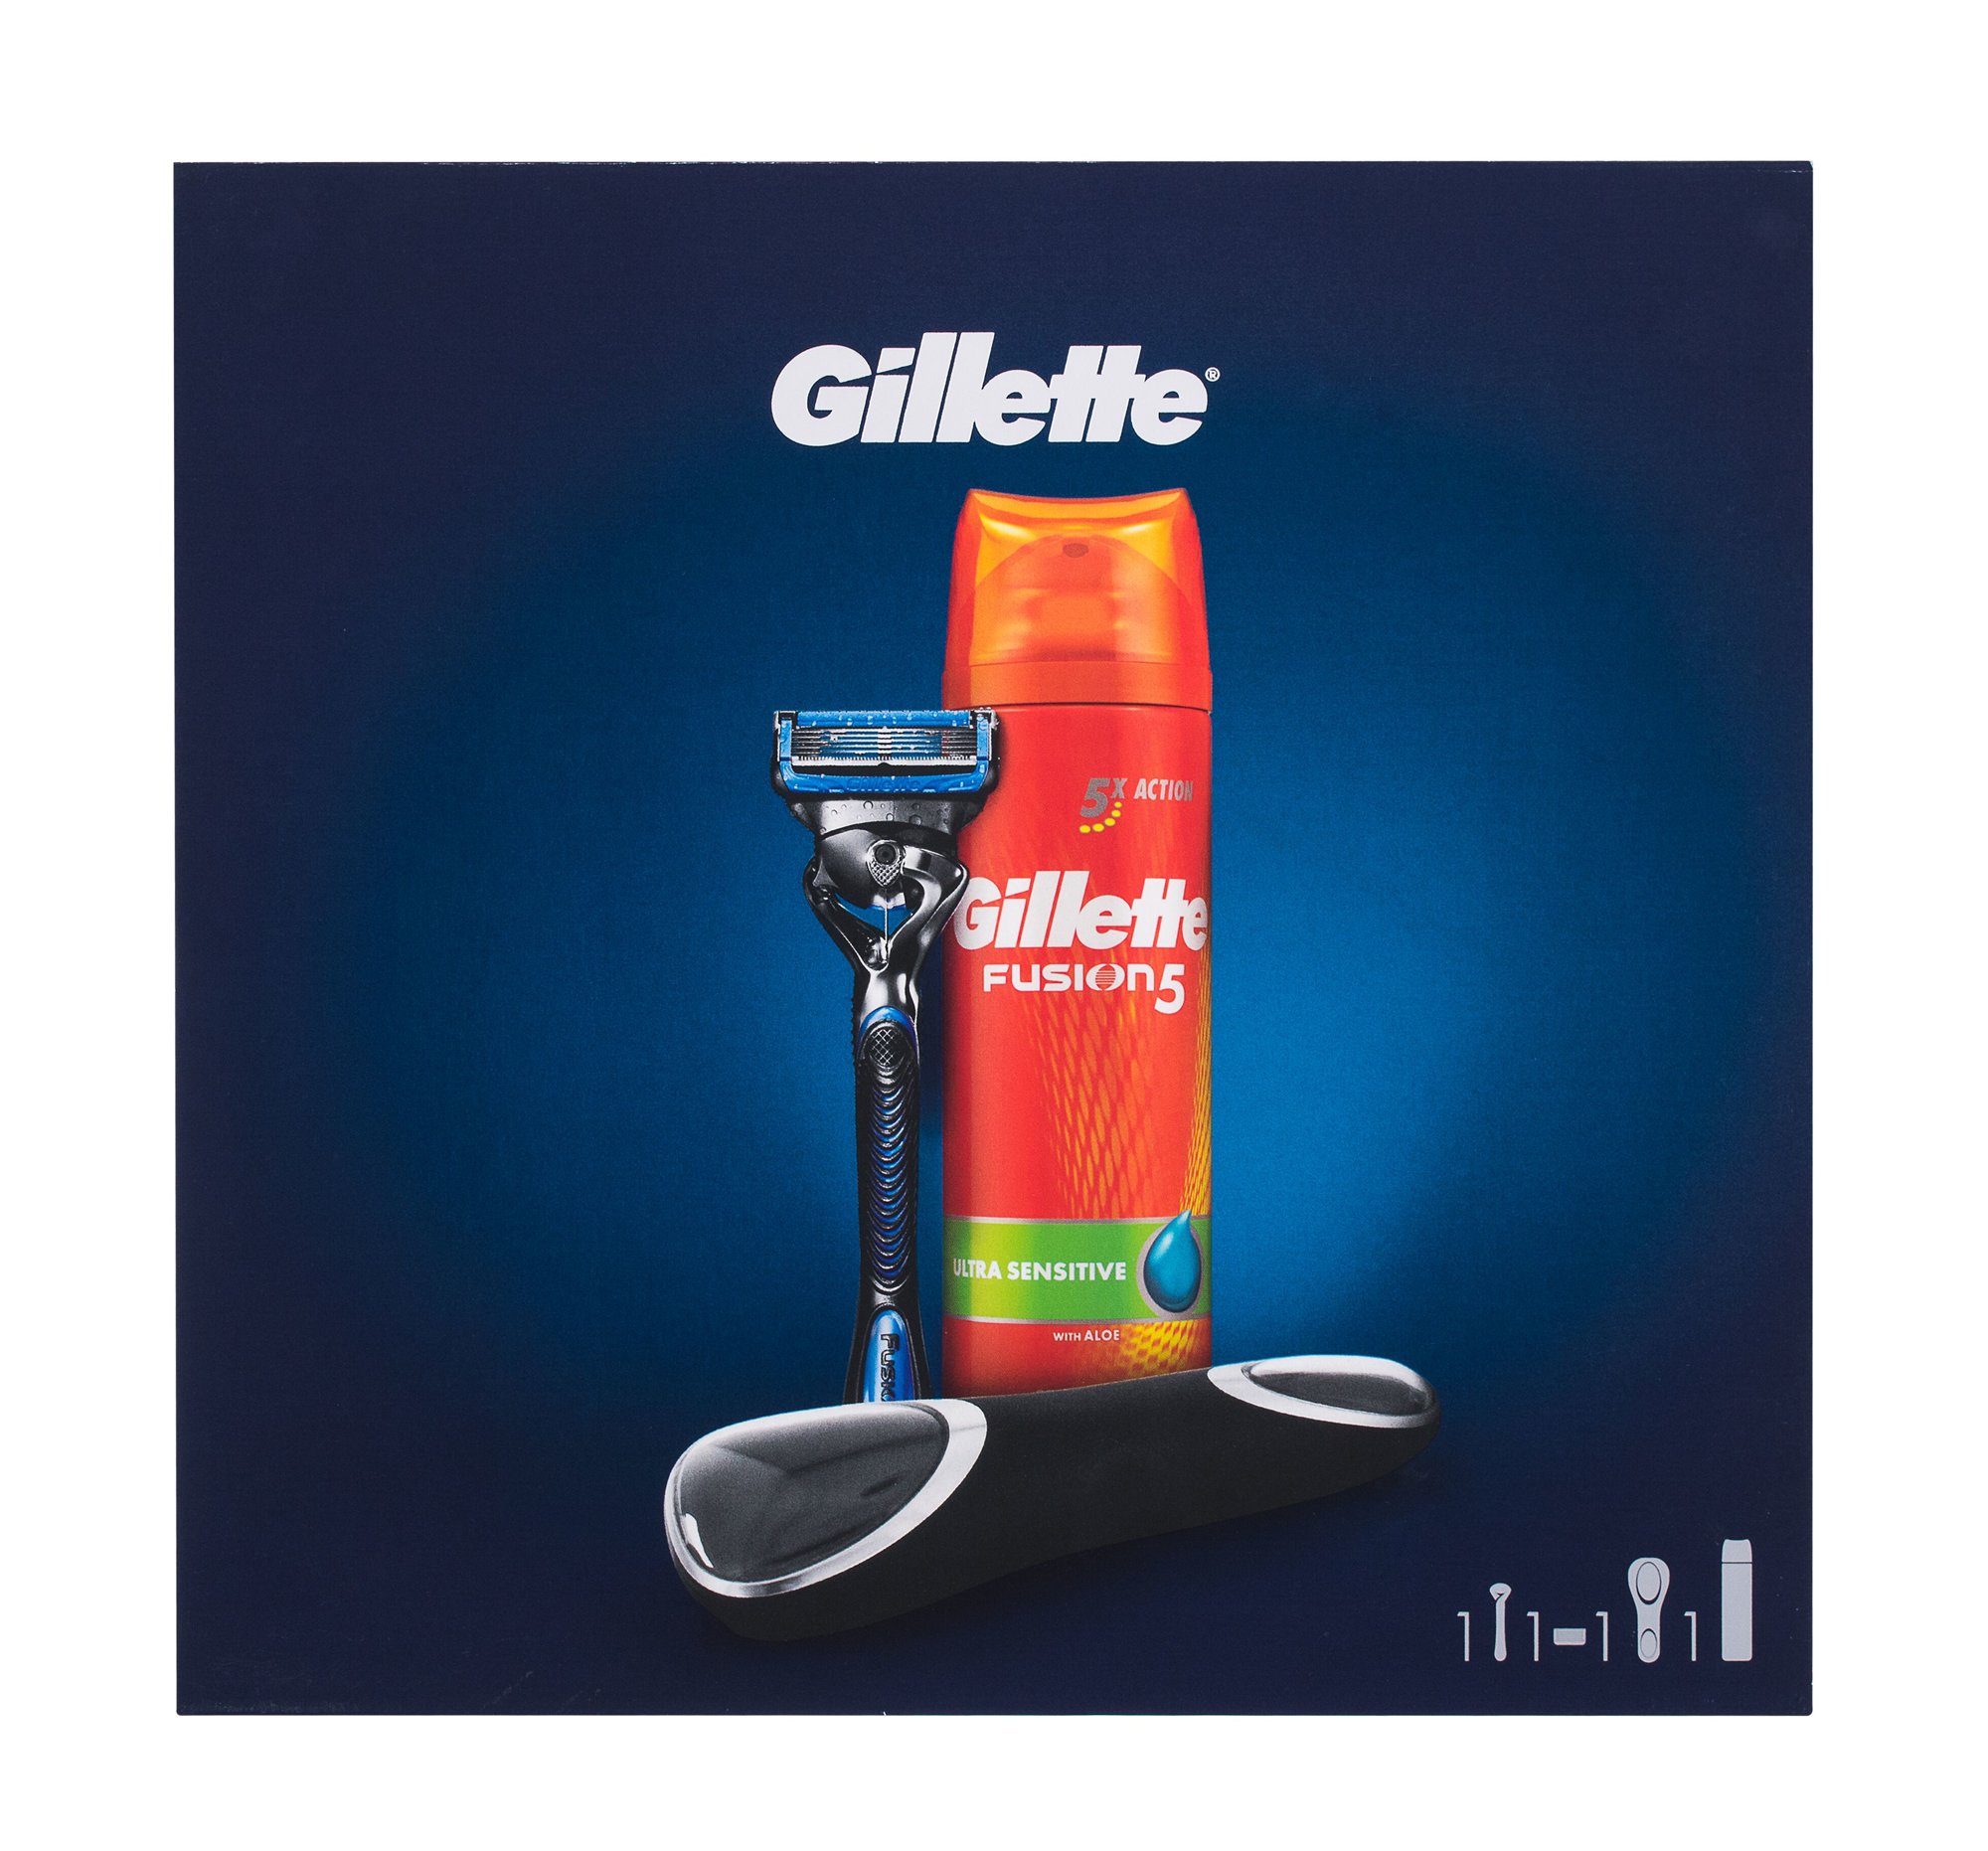 Gillette Fusion 5 Proshield Chill Flexball skustuvas